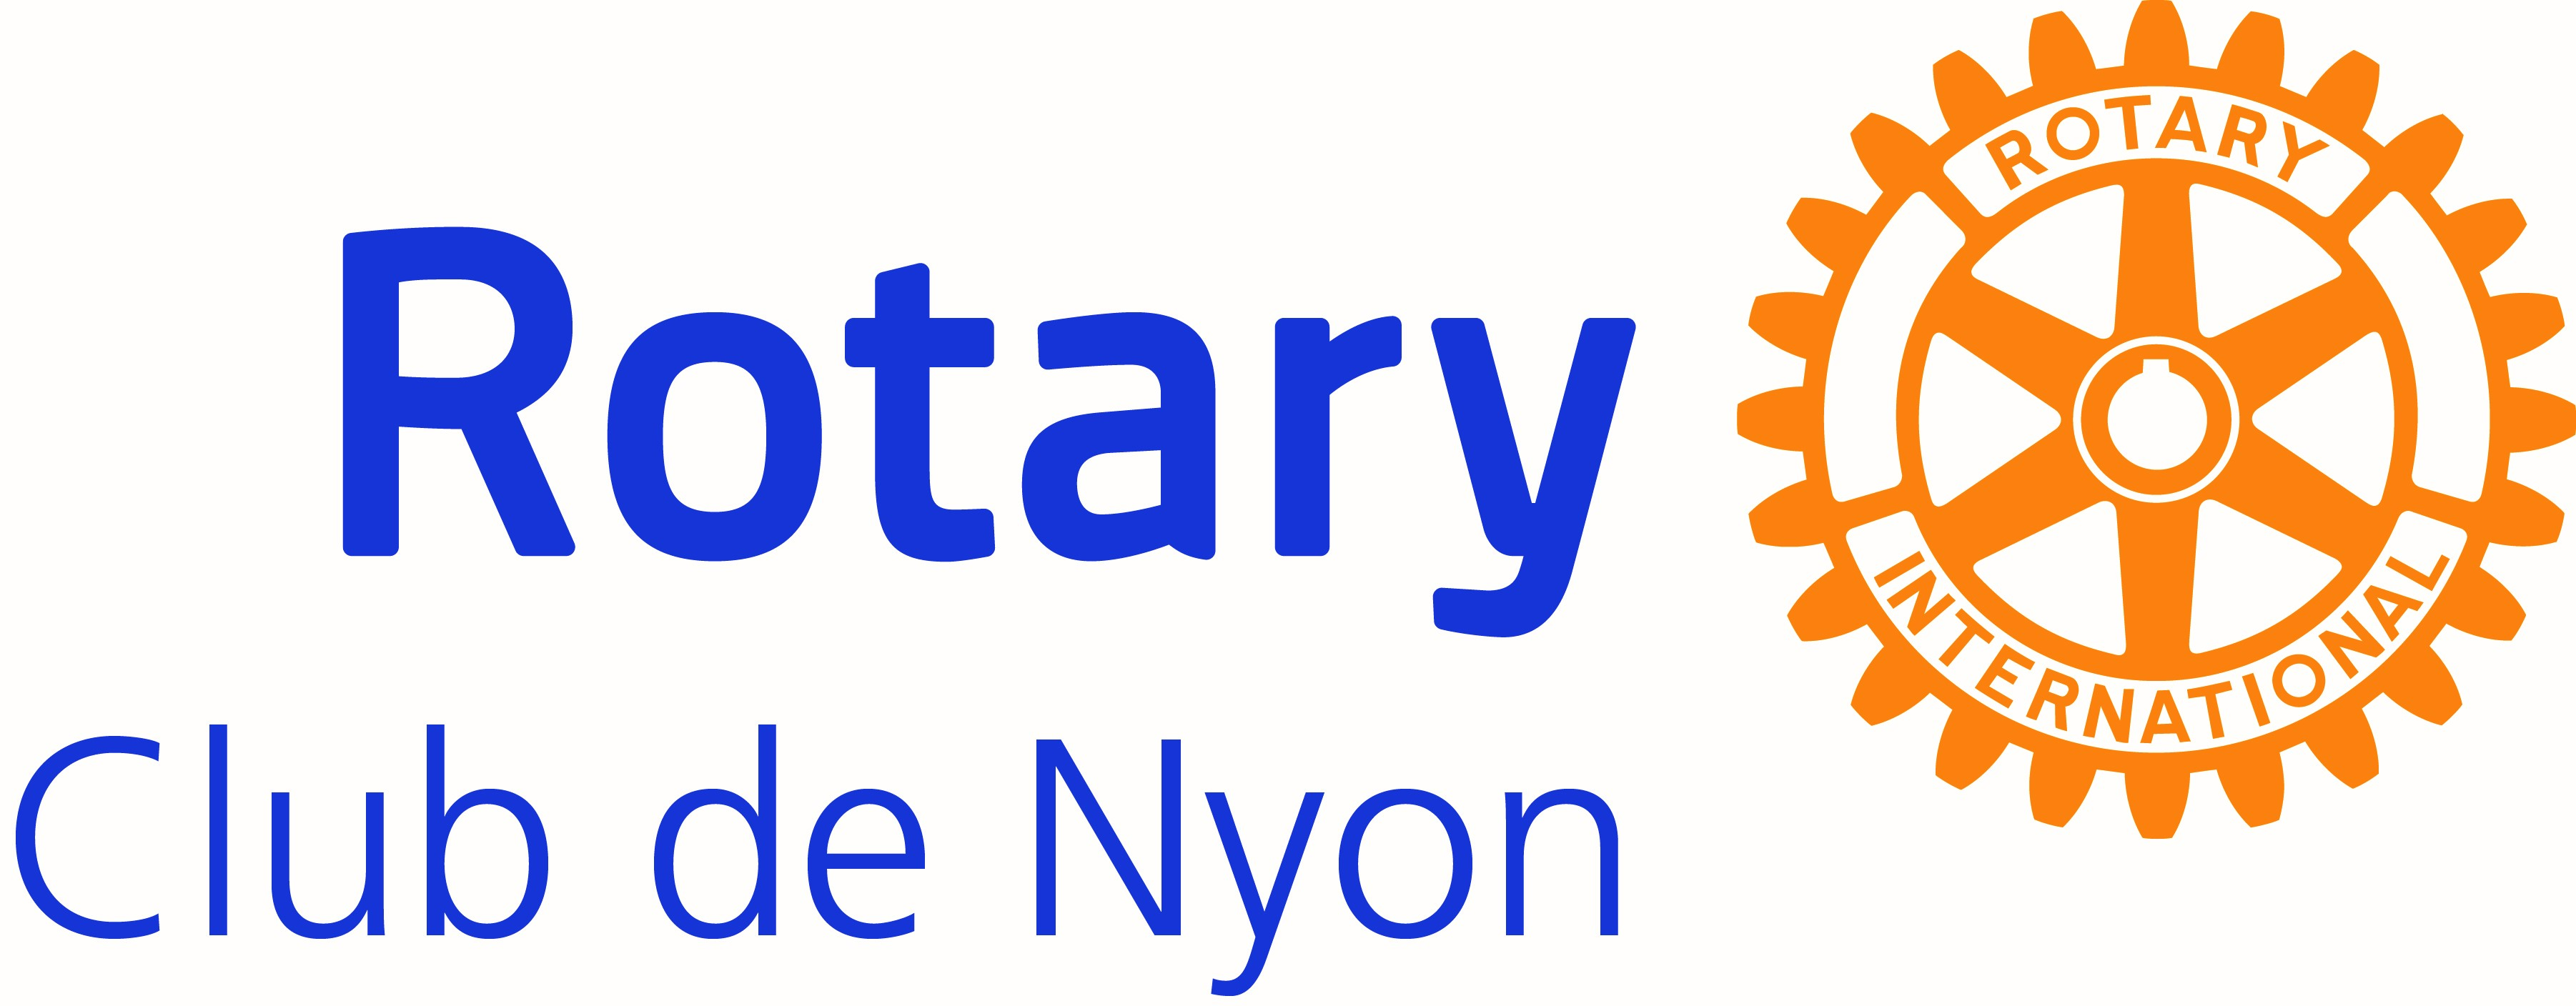 Rotary Nyon logo